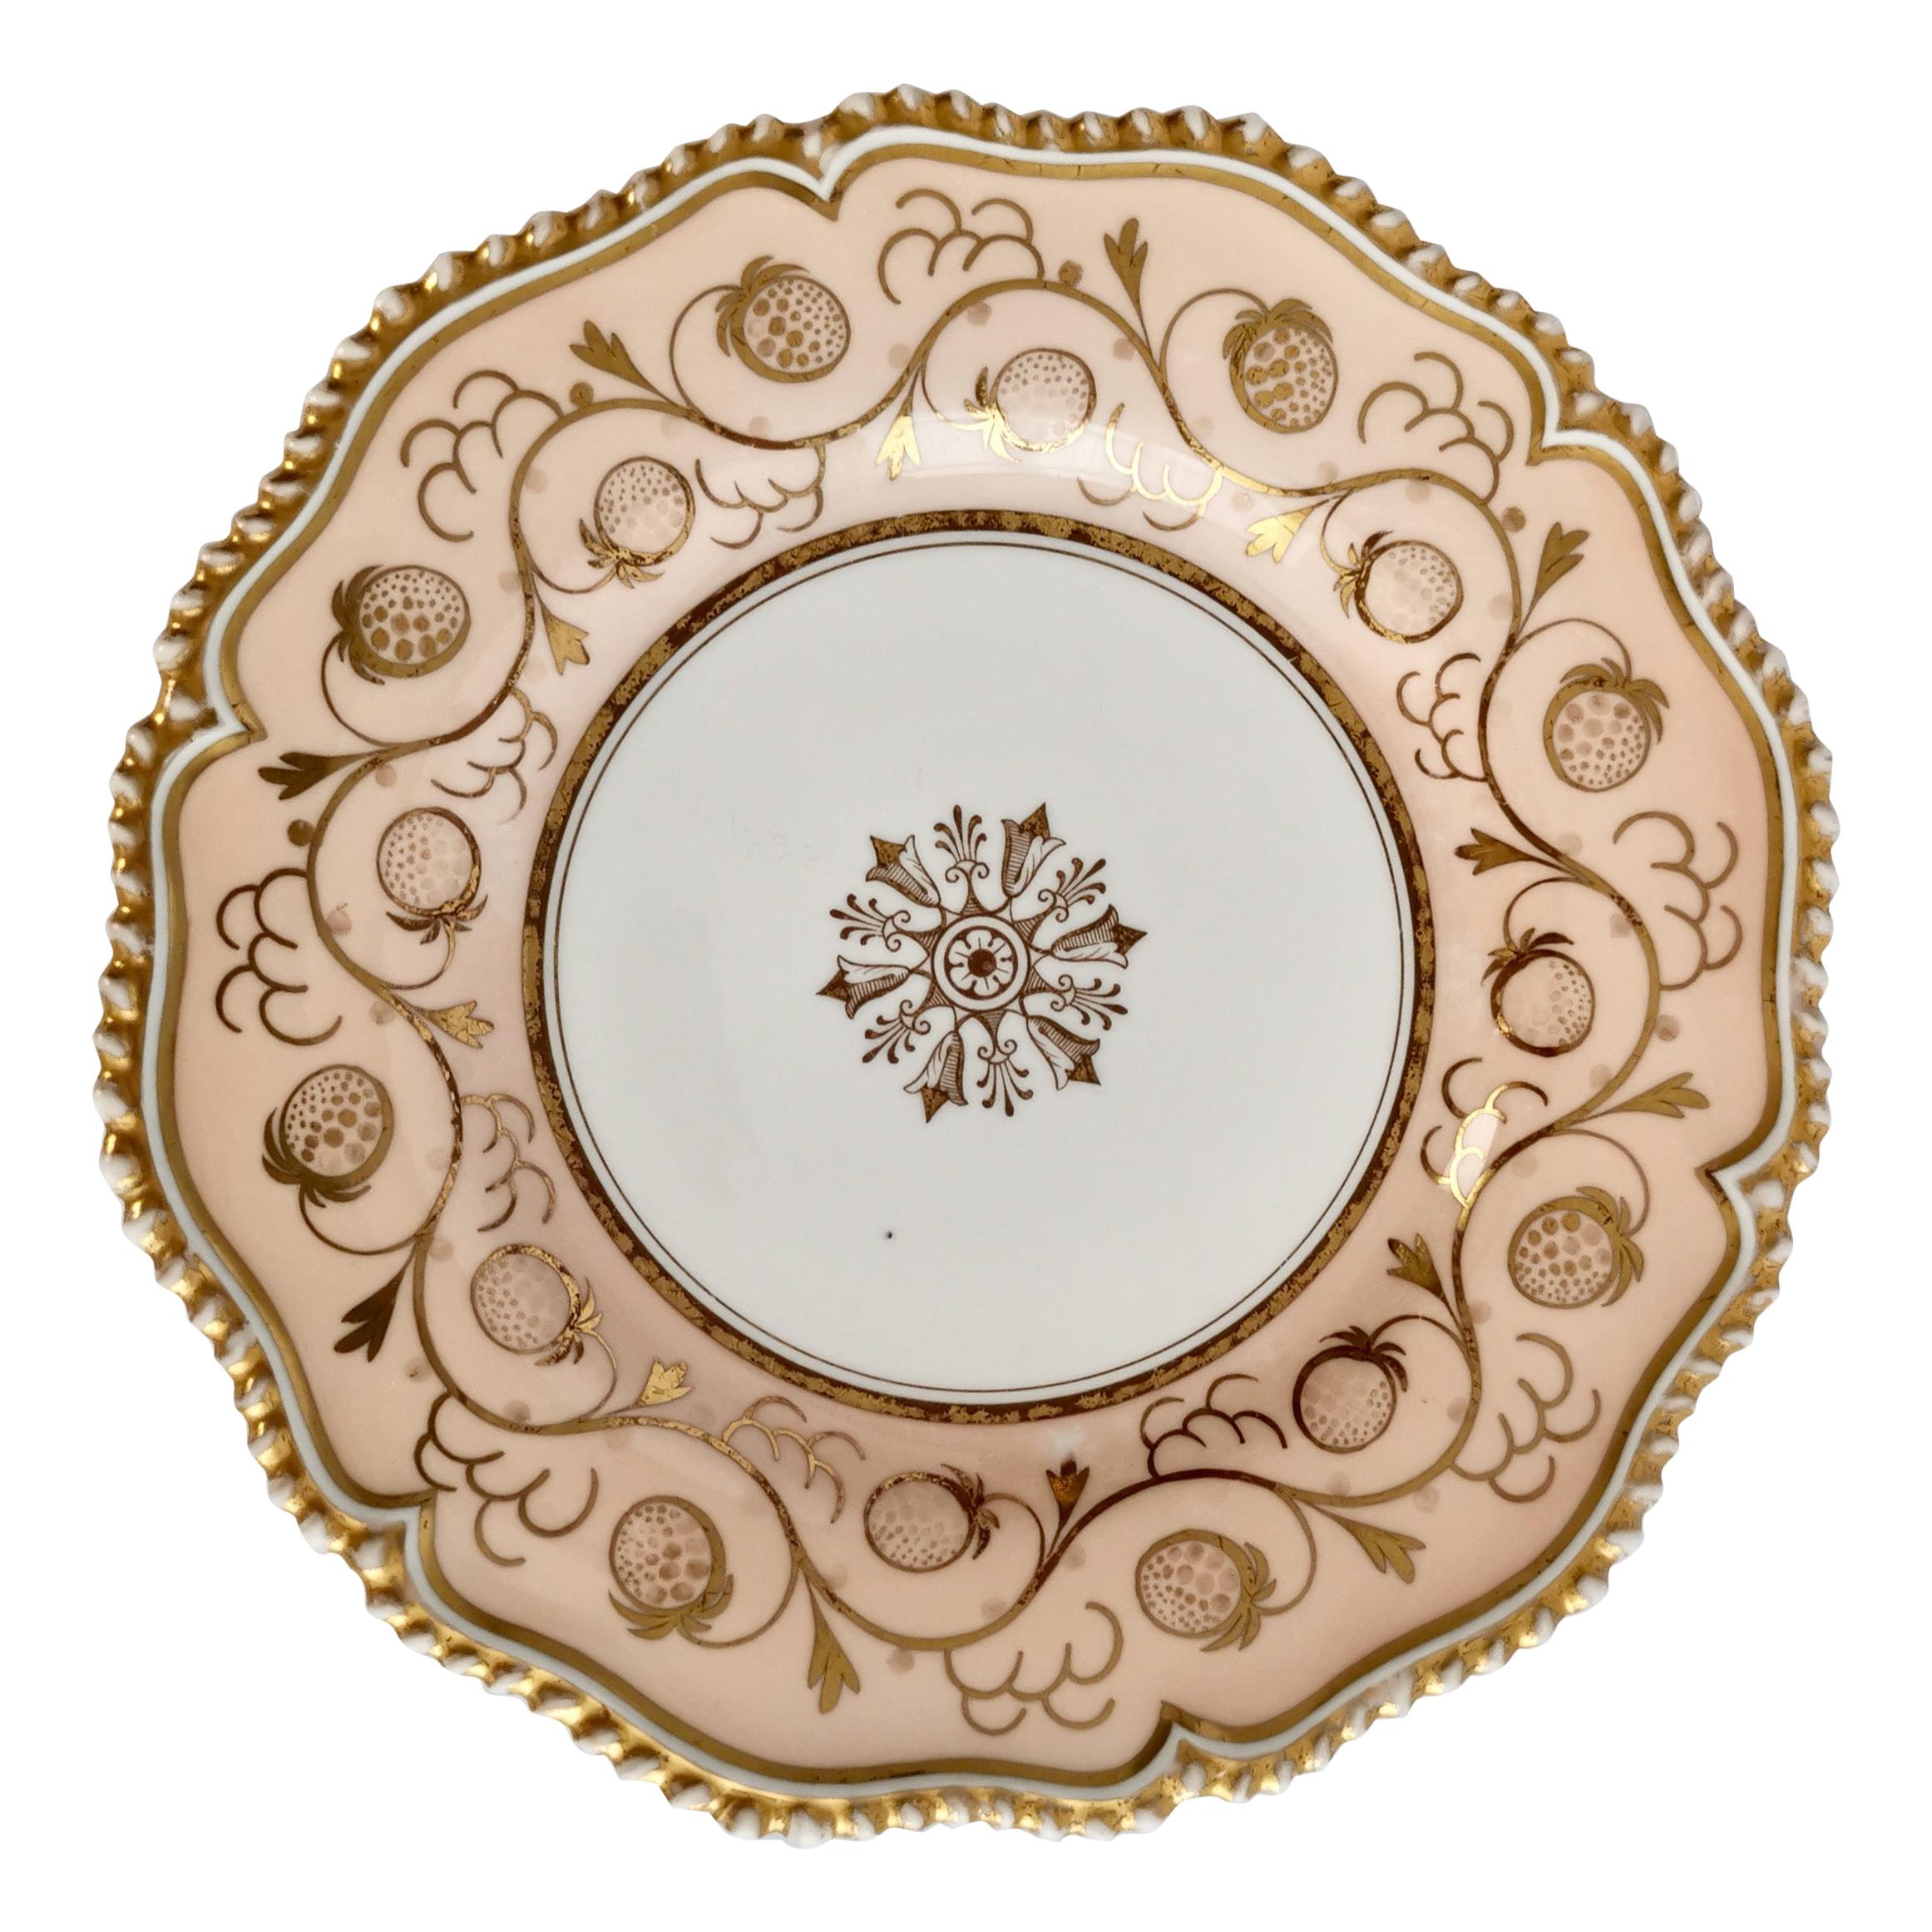 Flight Barr & Barr Porcelain Plate, Peach, Gilt Strawberries, Regency ca 1825